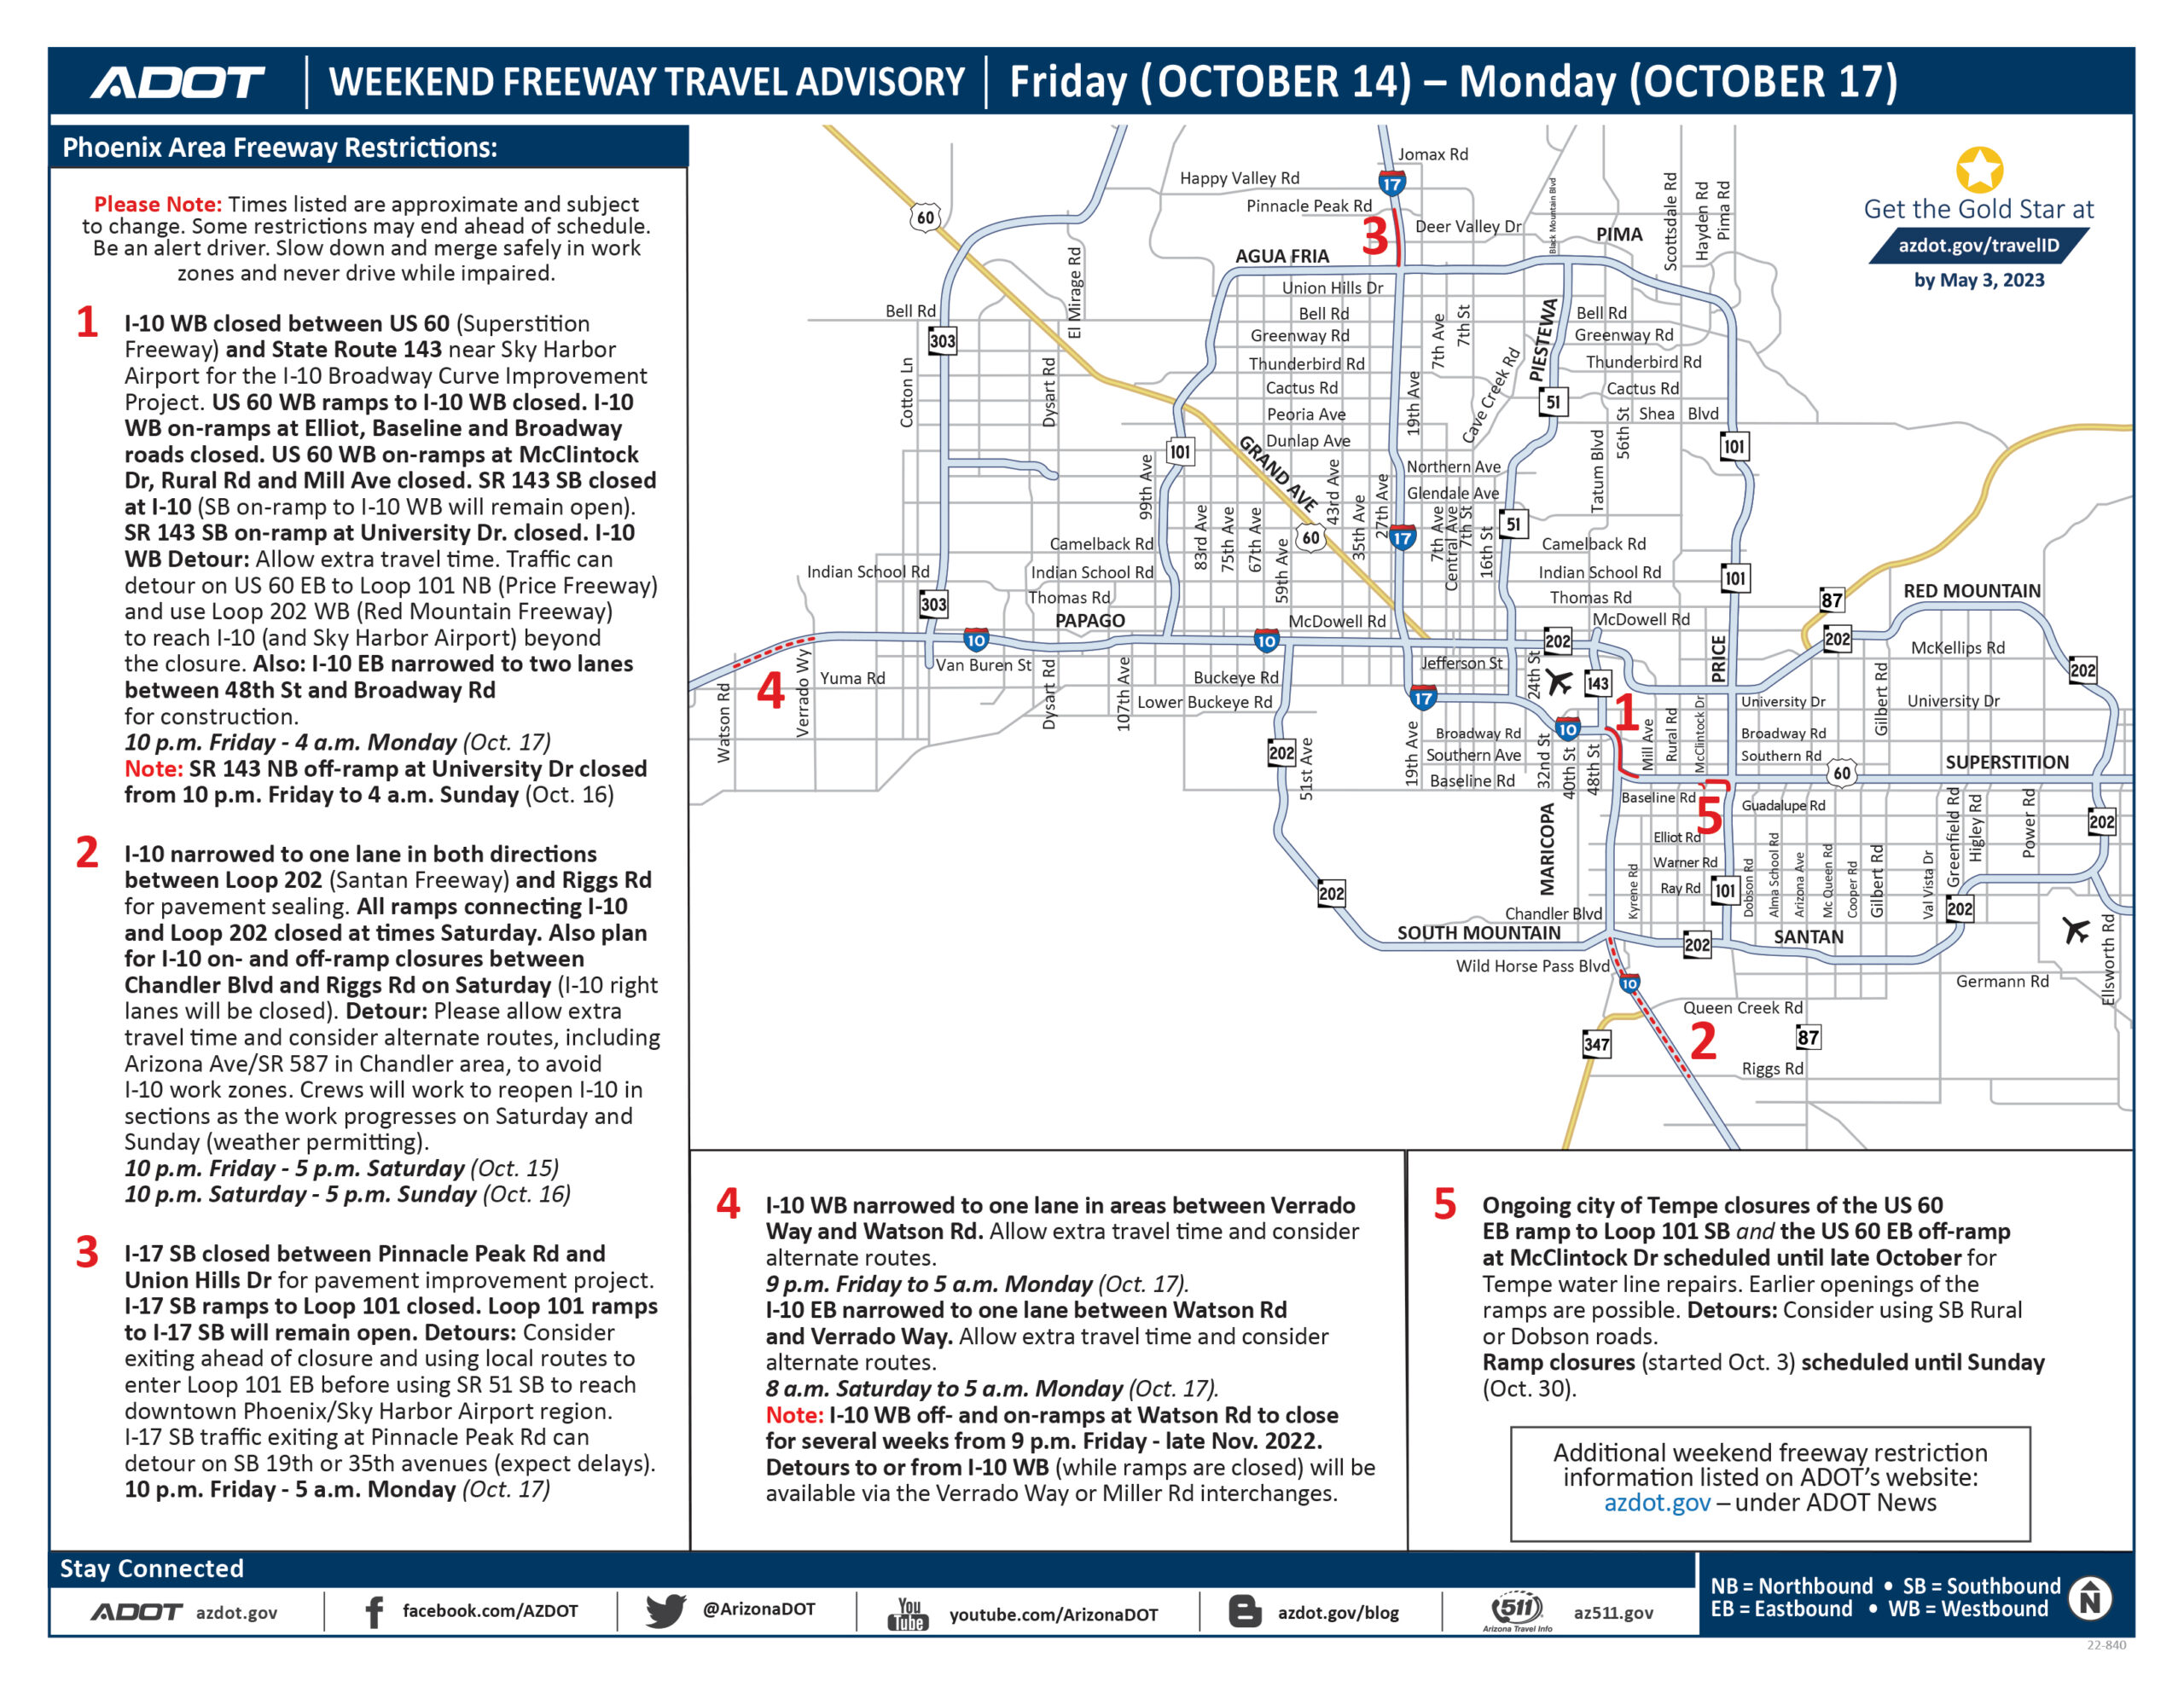 Phoenix-area freeway weekend travel restrictions, Oct. 14–17